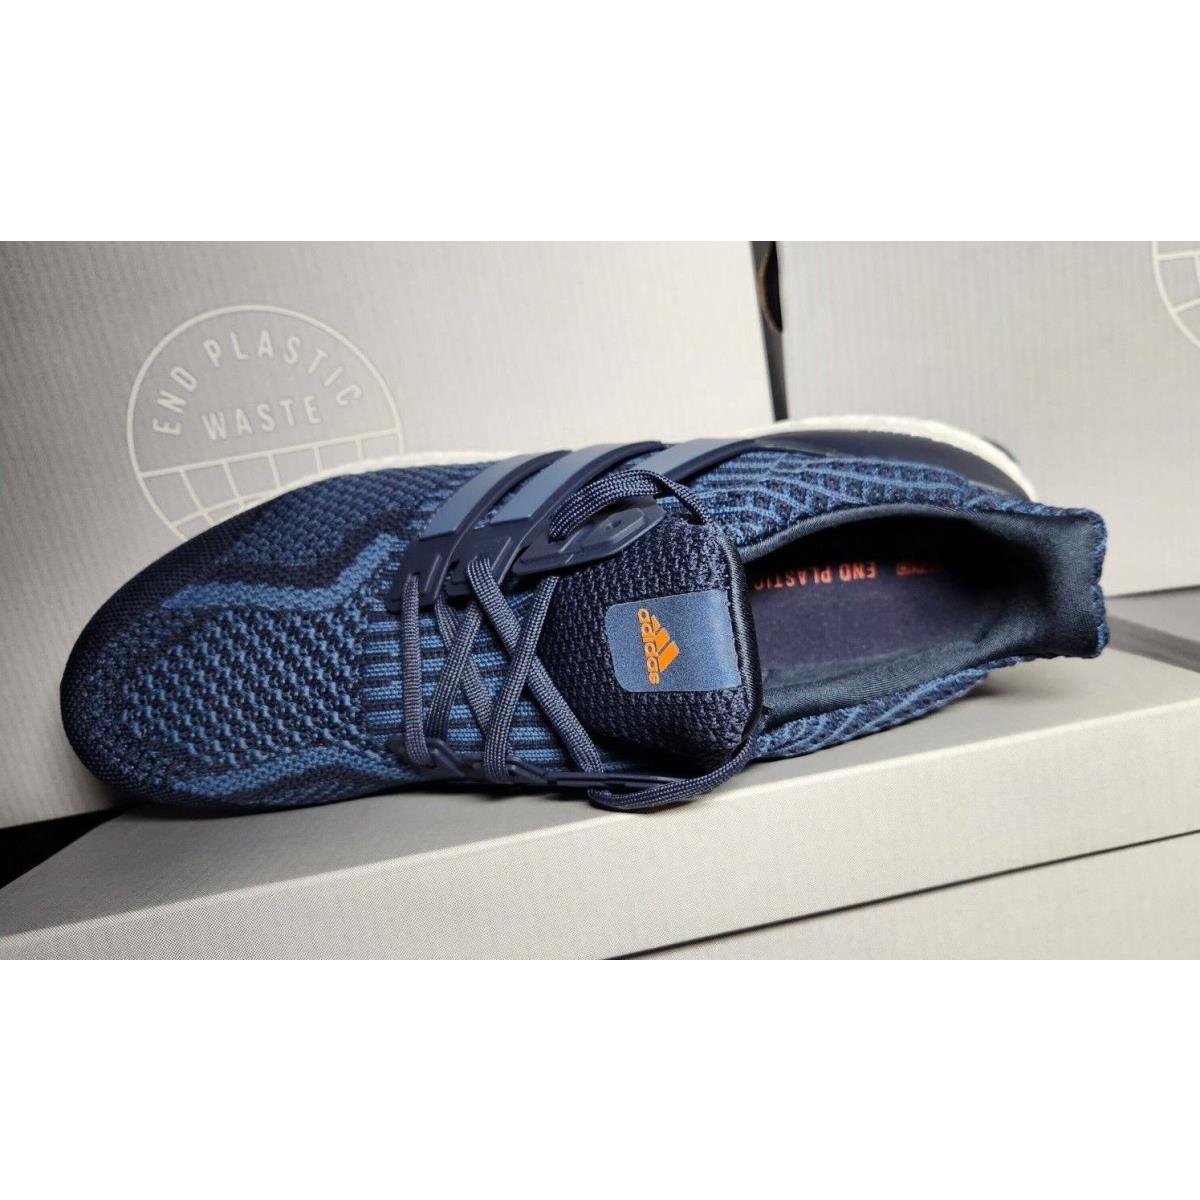 Adidas shoes UltraBoost - Blue 1